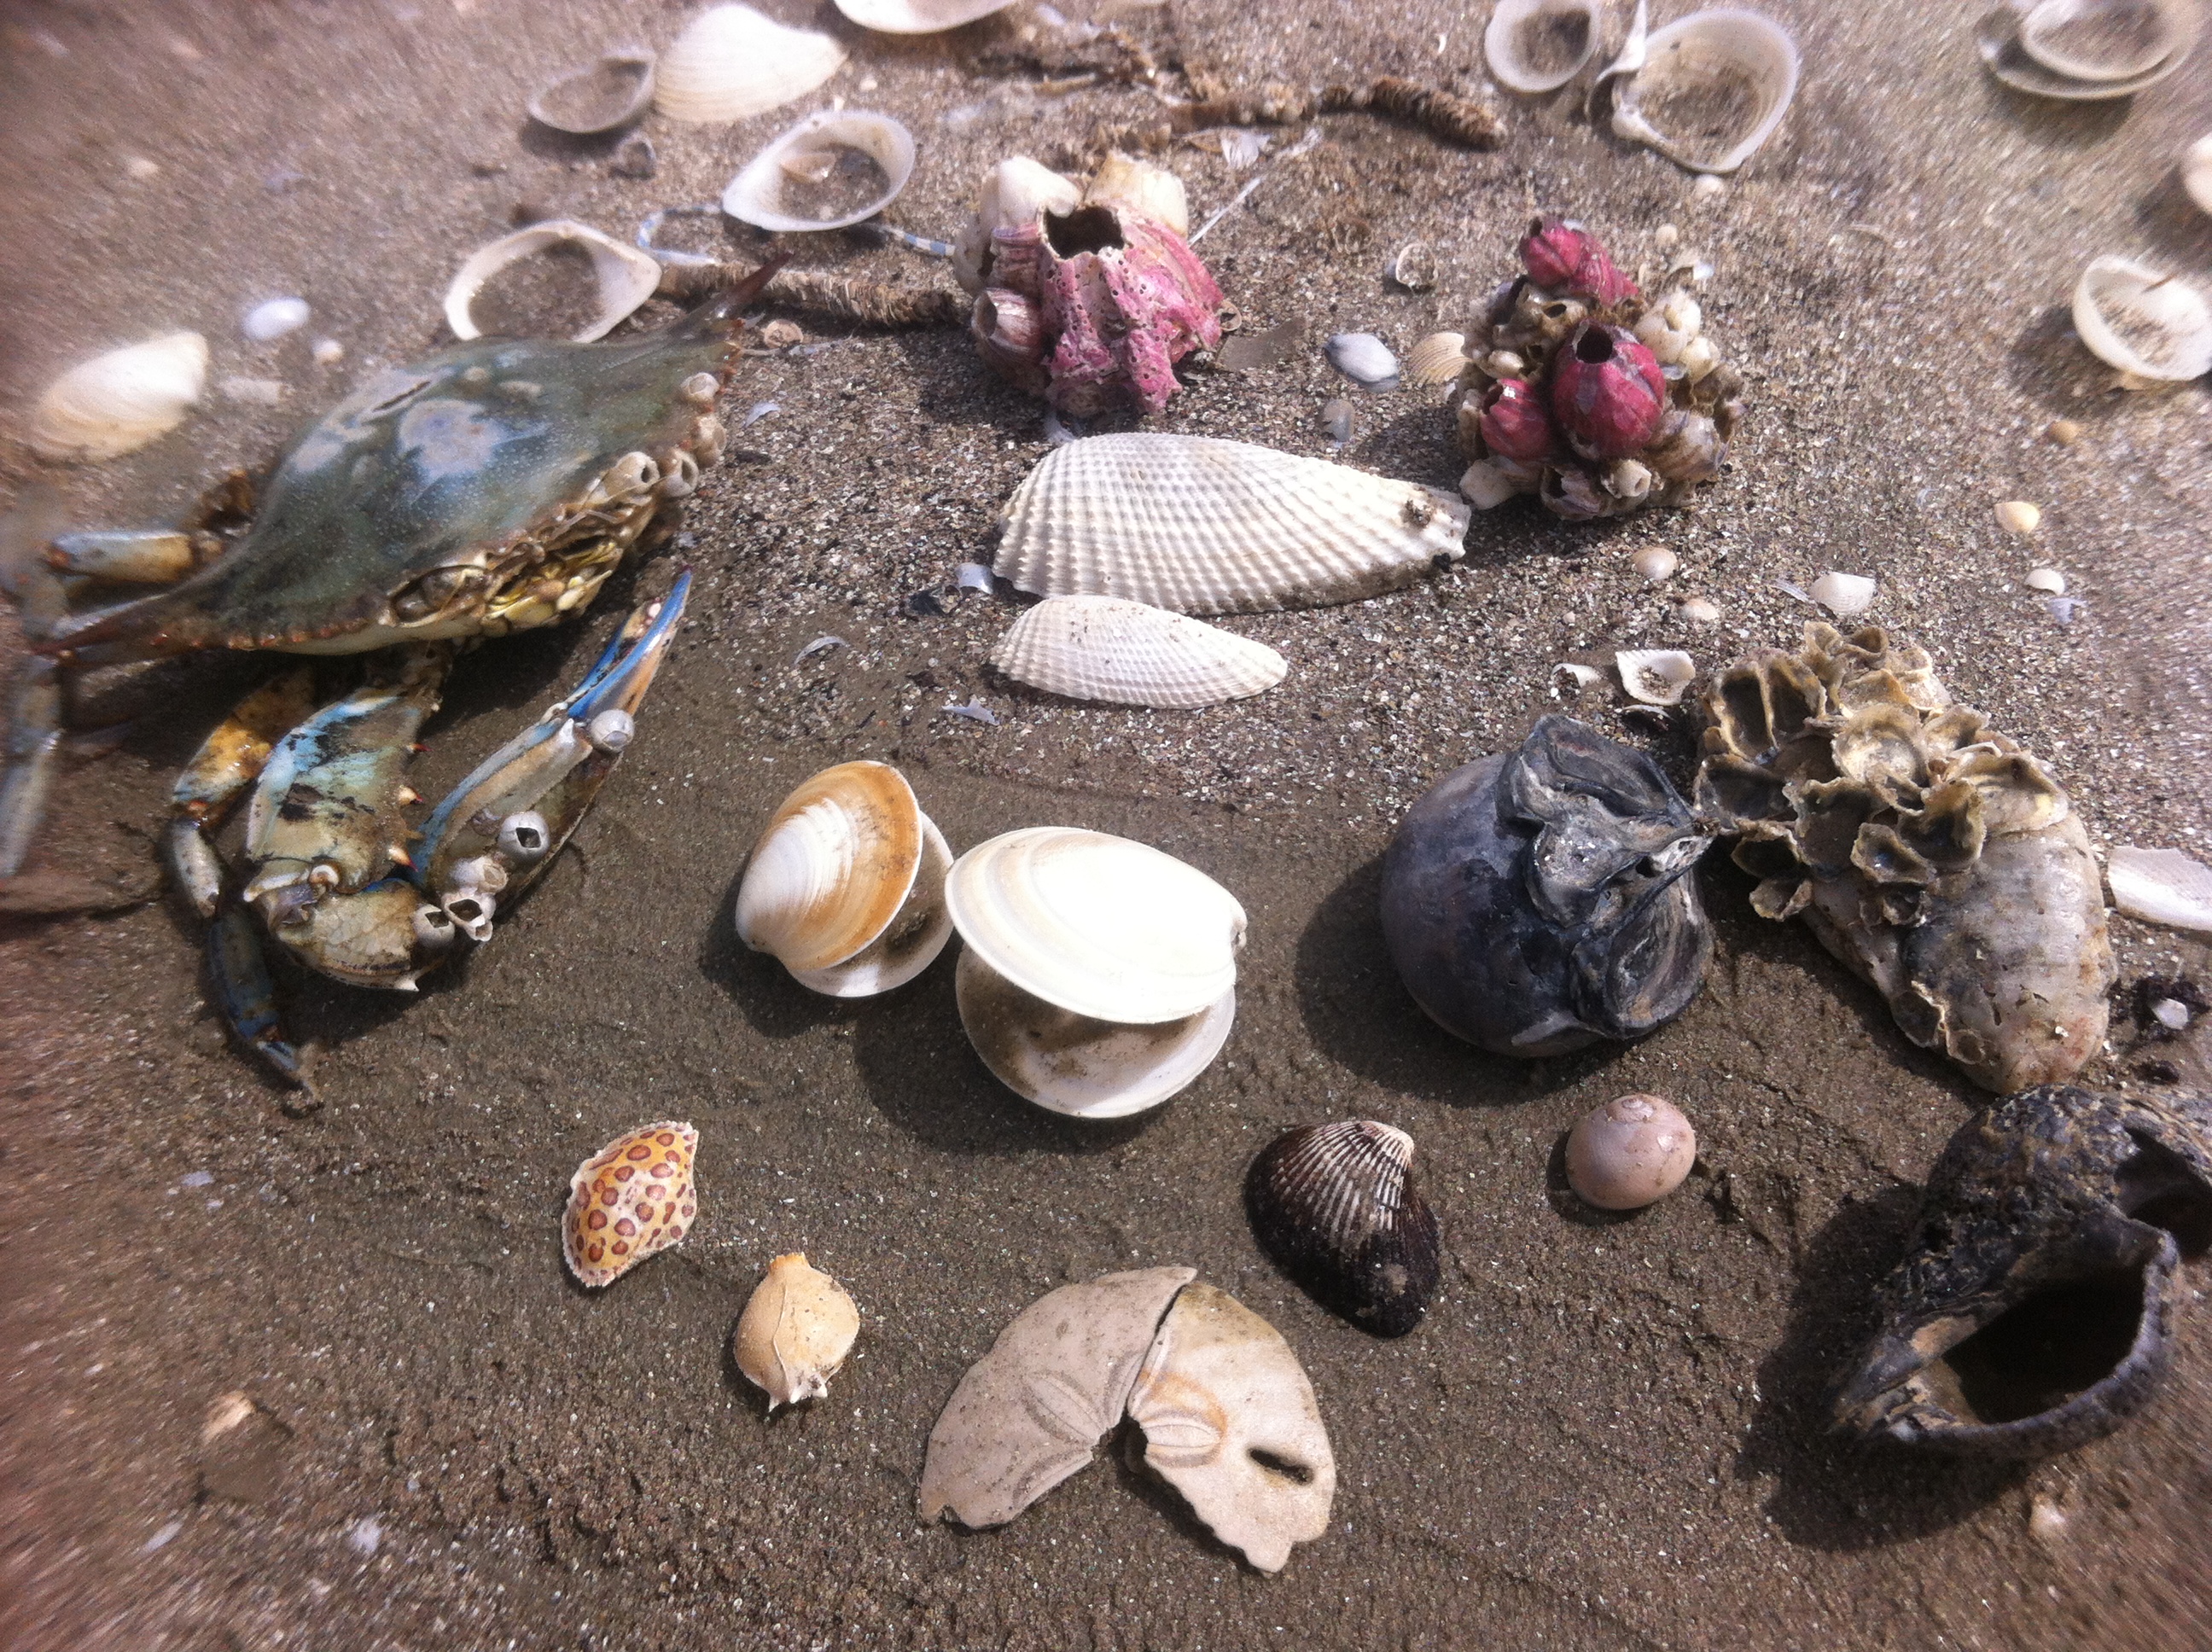 Beach treasures 3-4-15 (5).JPG